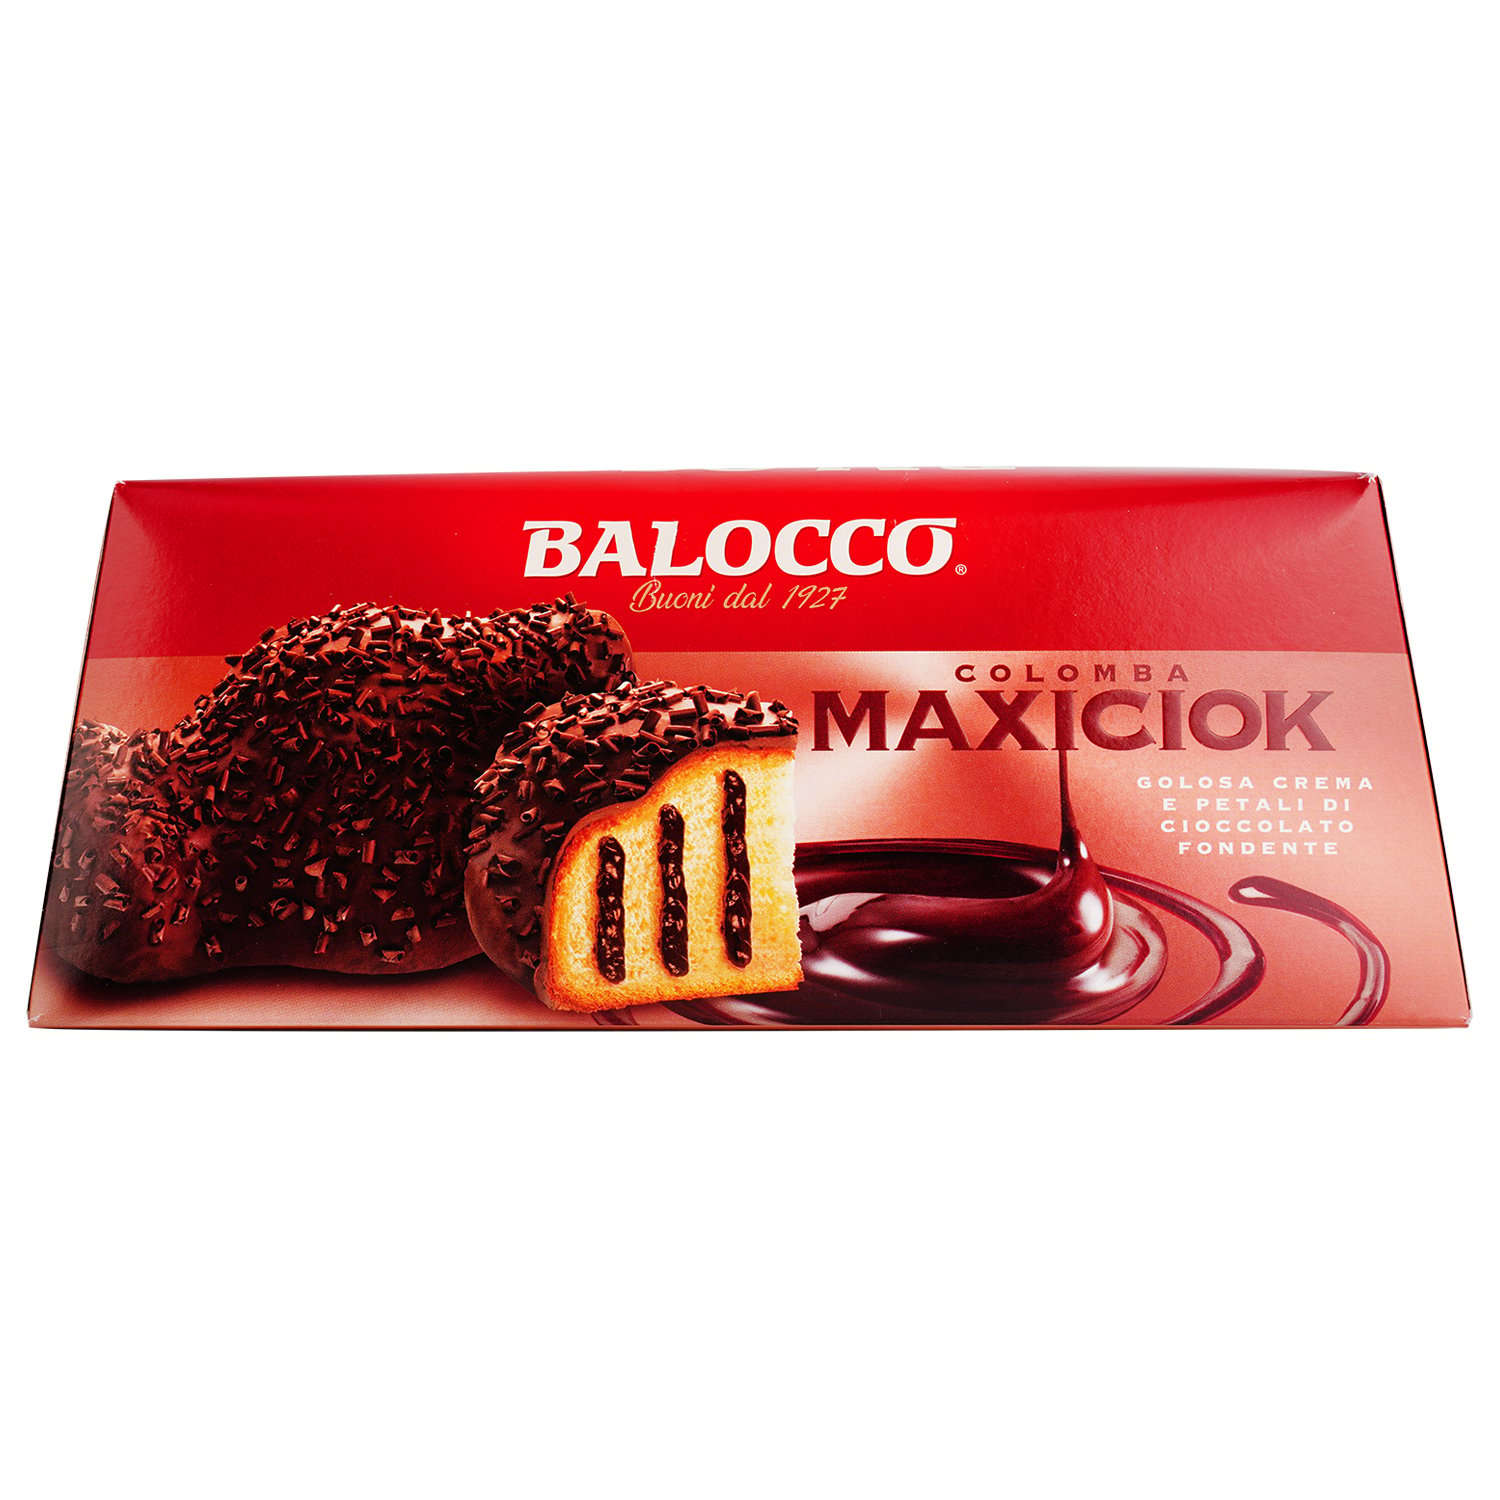 Коломба Balocco Colombа Maxiciok с начинкой из черного шоколада 750 г (892440) - фото 4